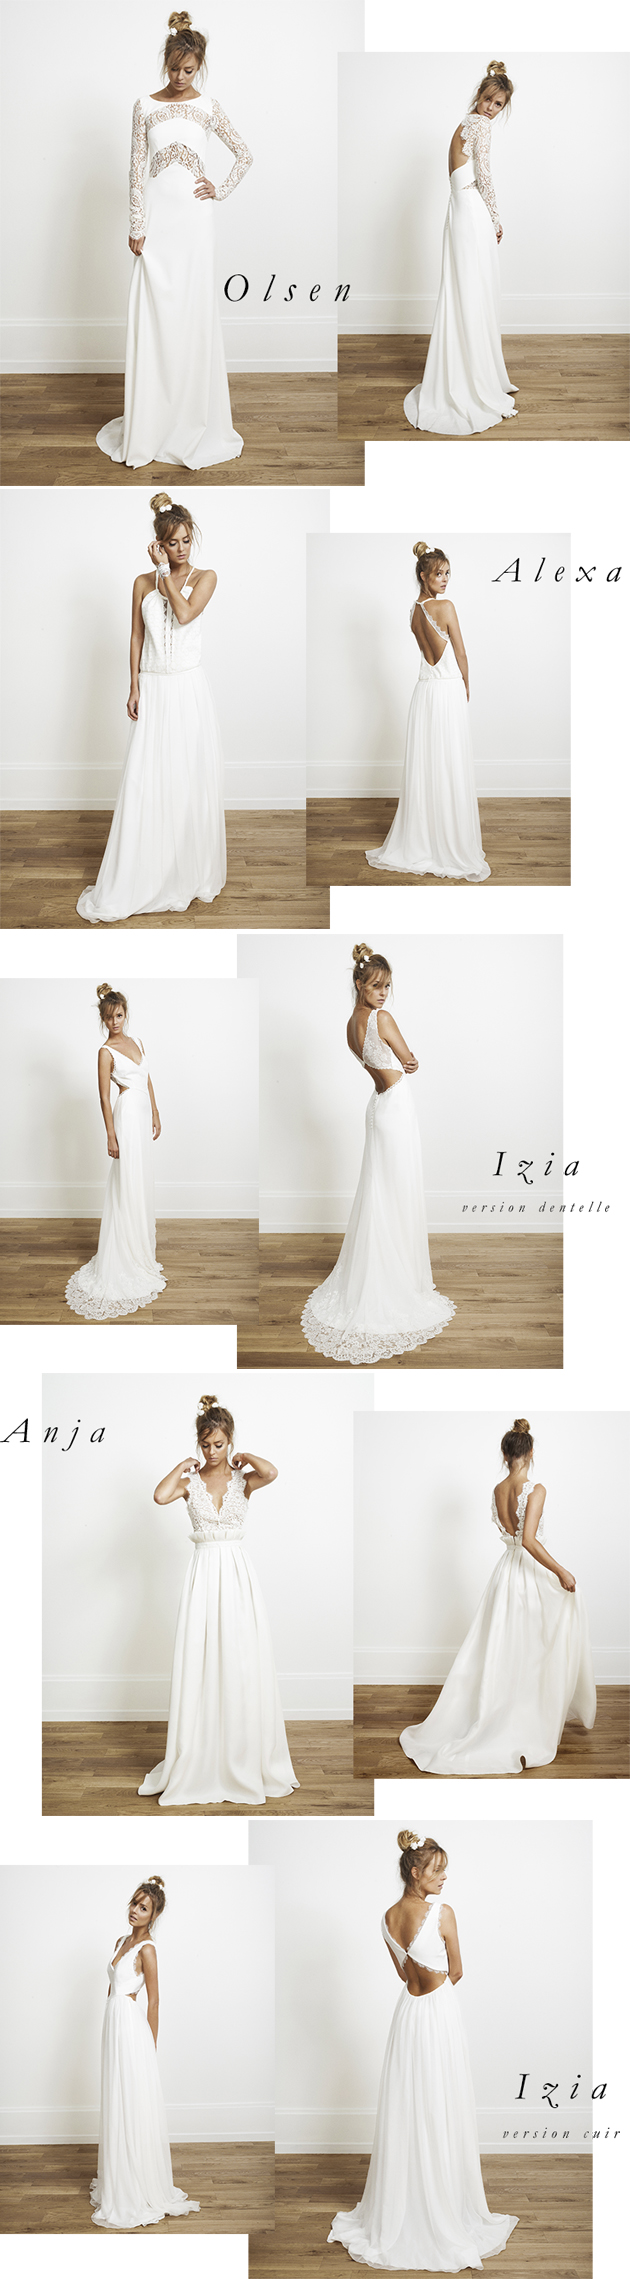 wedding dress inspiration1 vivat veritas